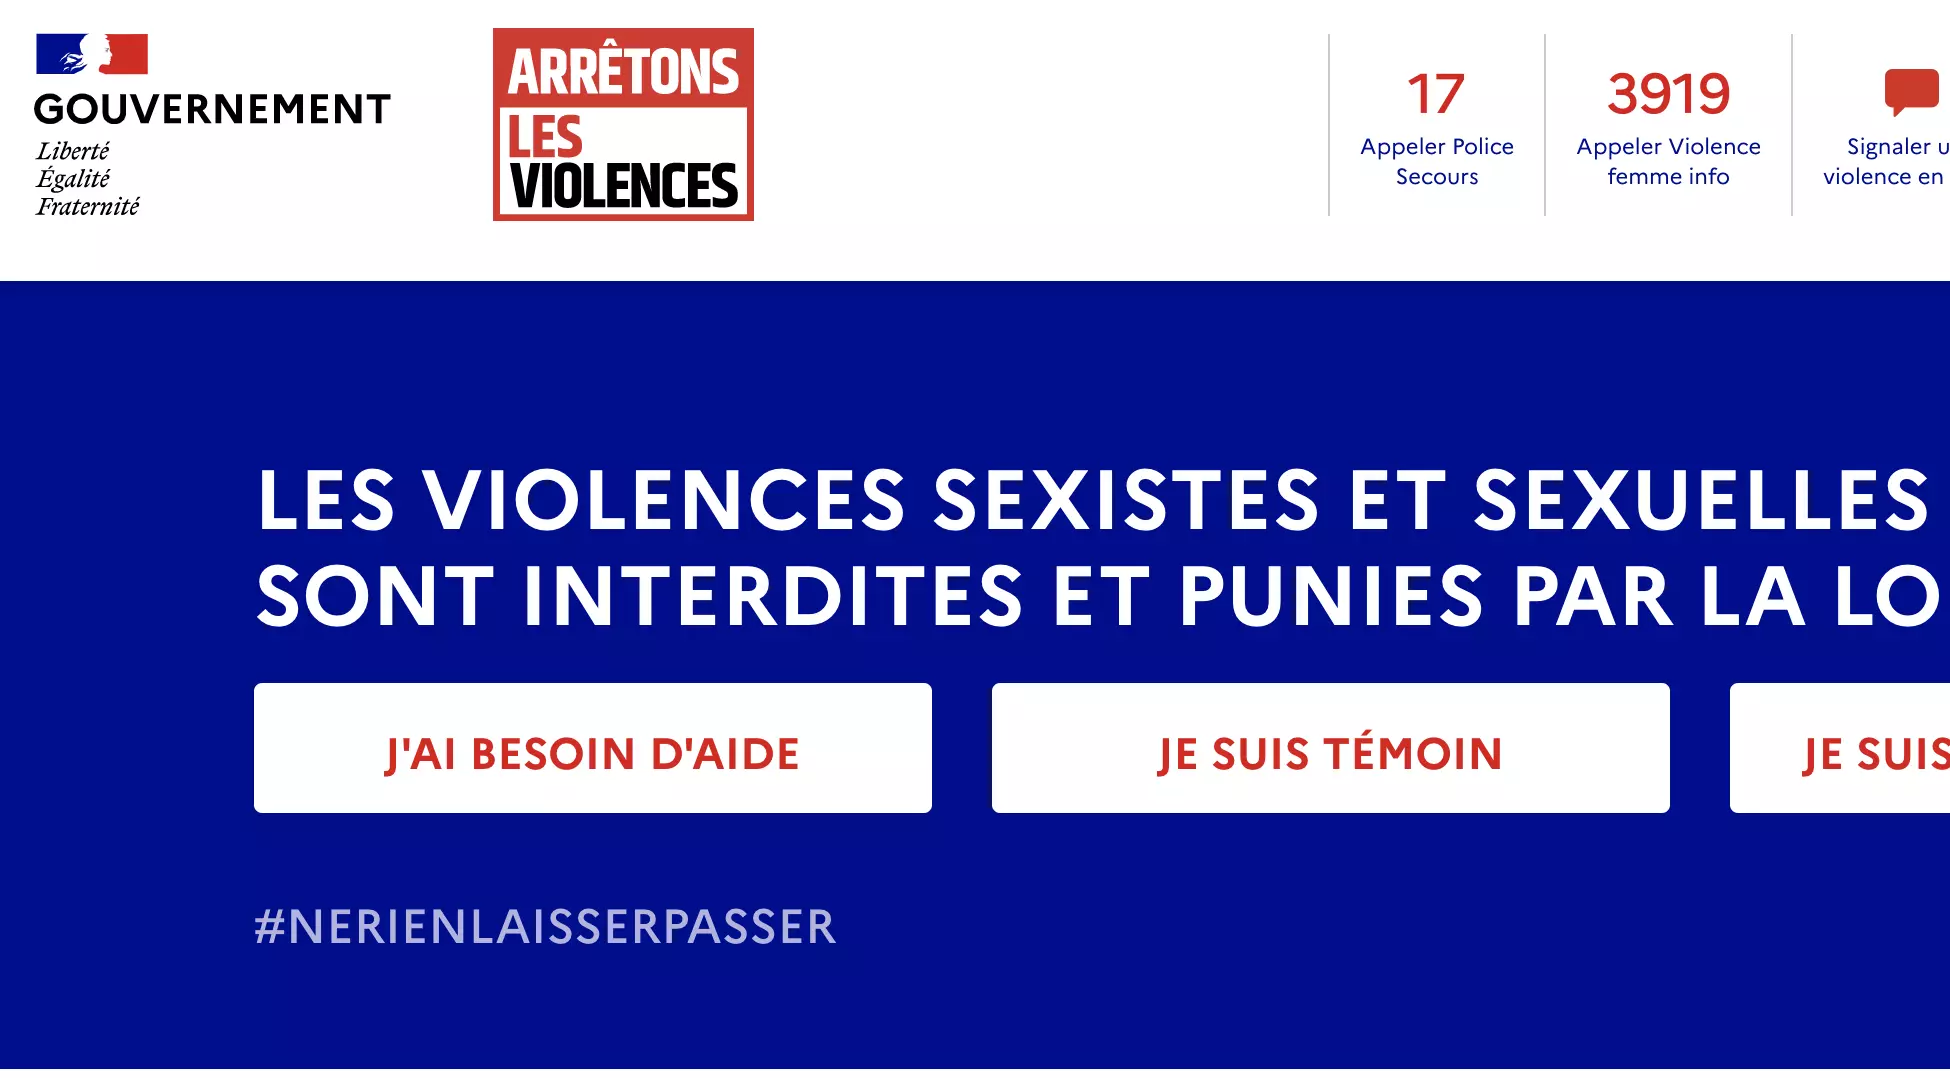 Site arretonslesviolences.gouv.fr